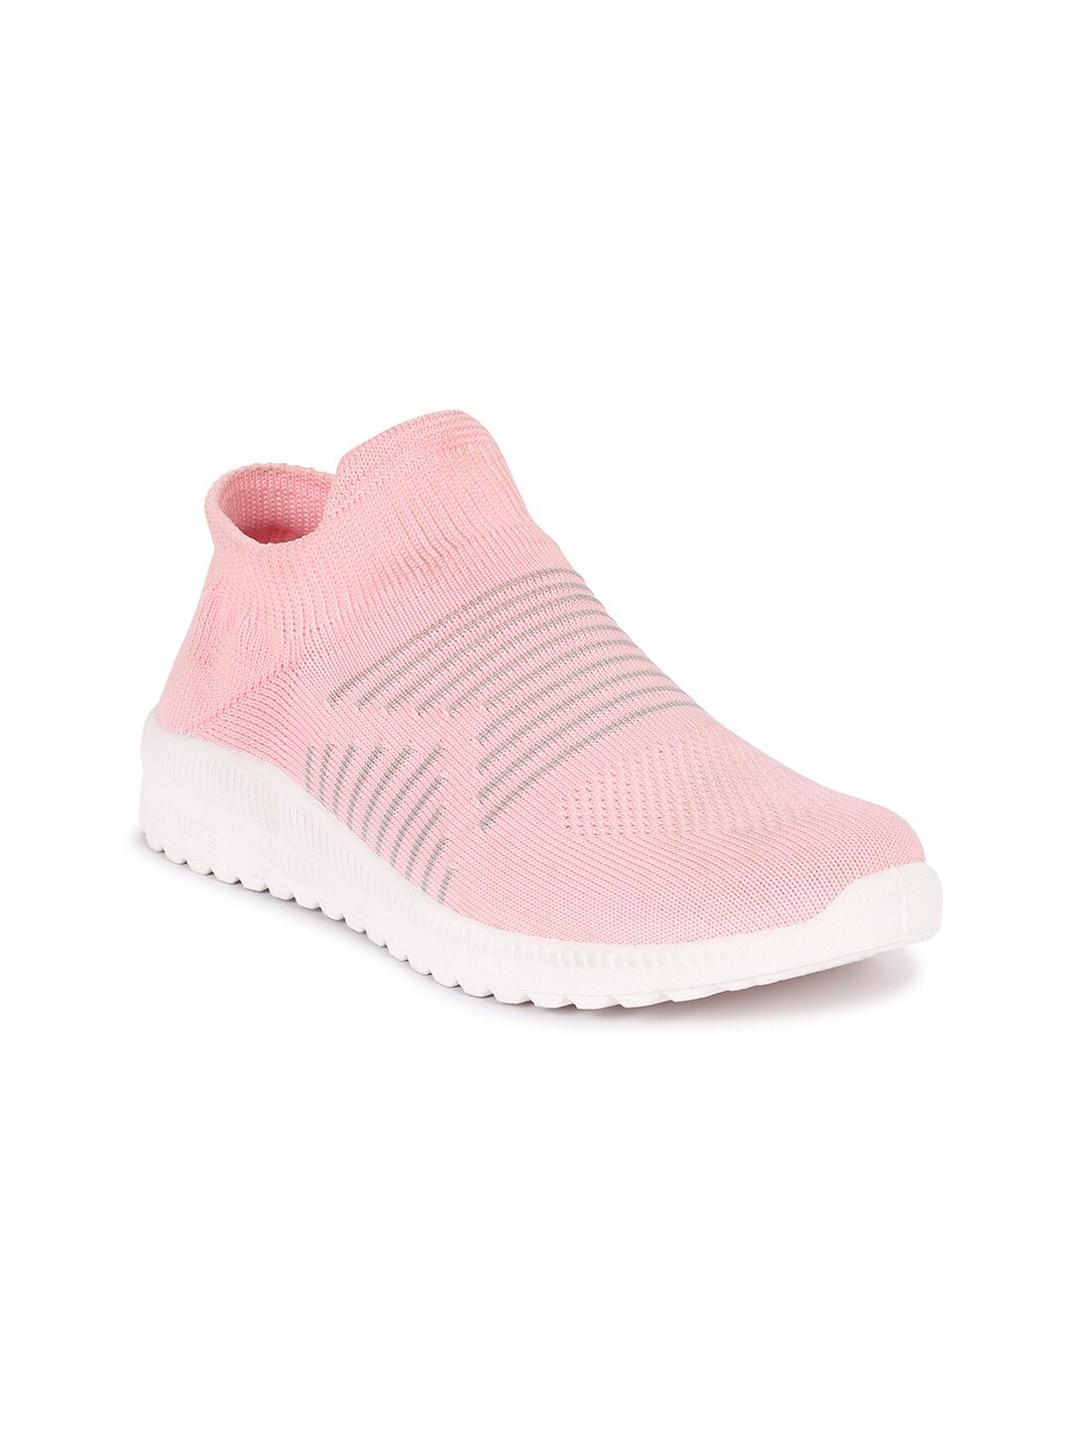 bella toes women woven design lightweight slip-on sneakers